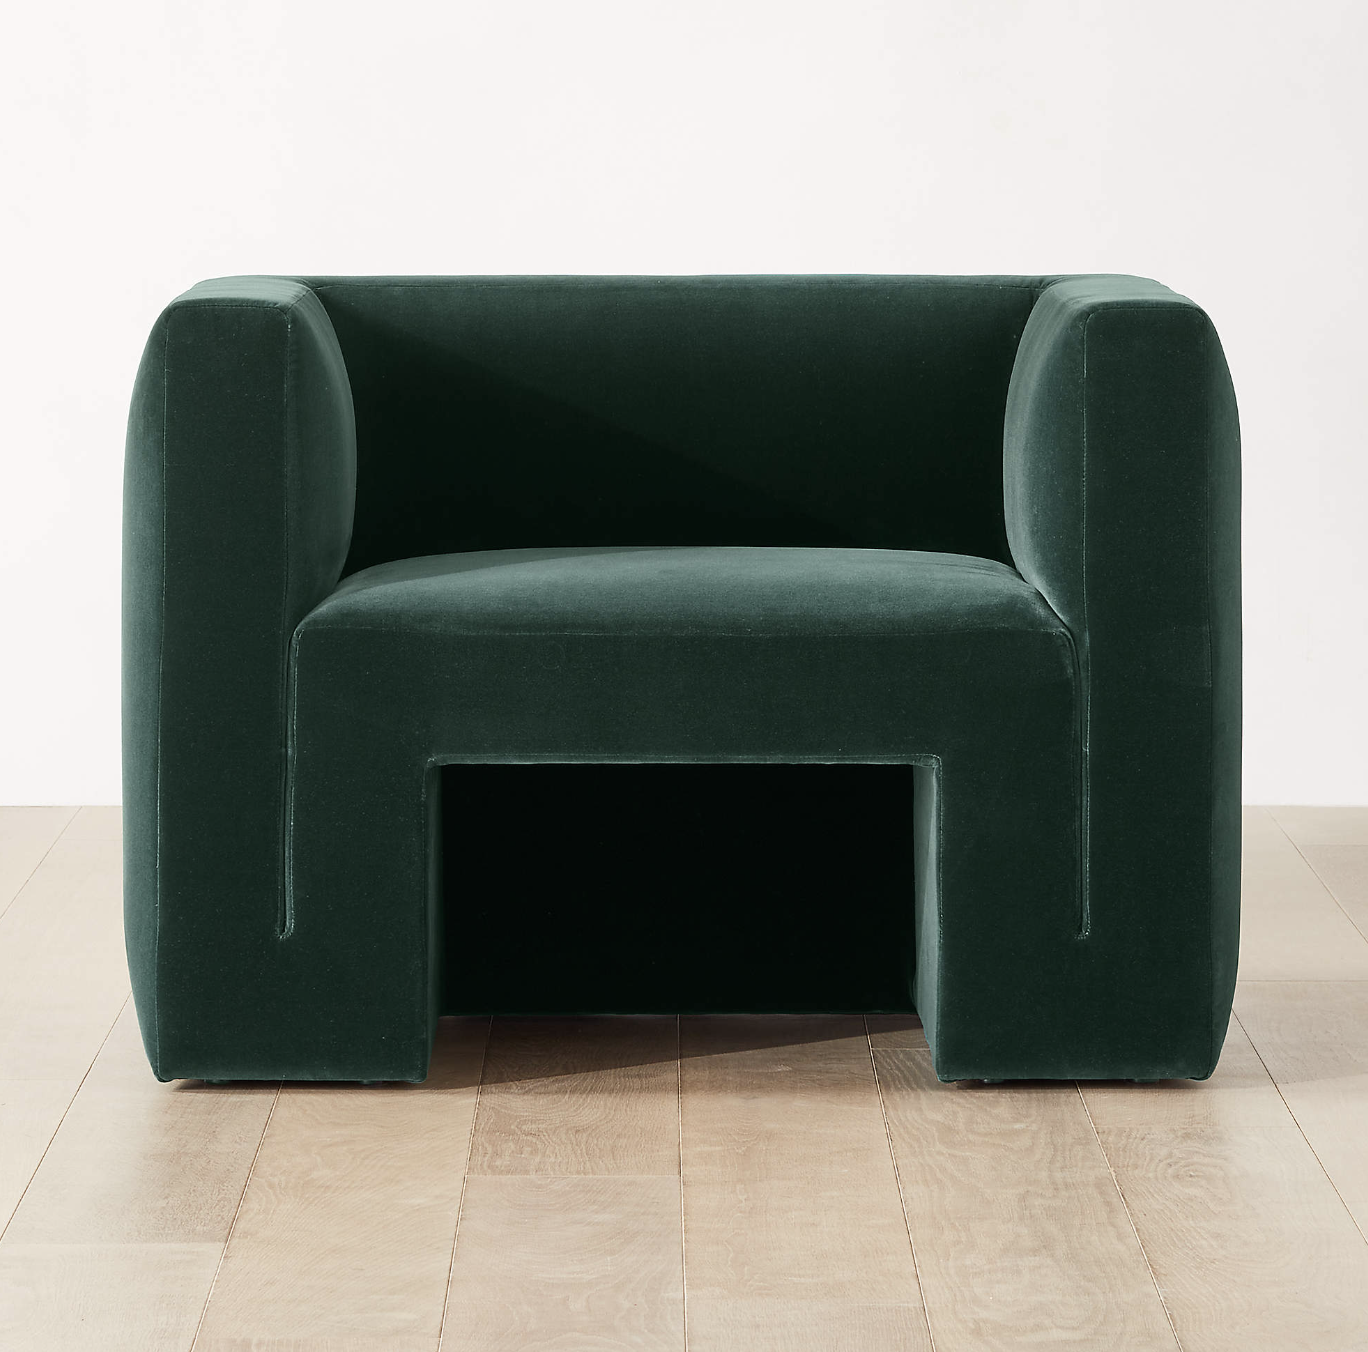 CB2 - $1099 - Matra Deep Teal Velvet Lounge Chair